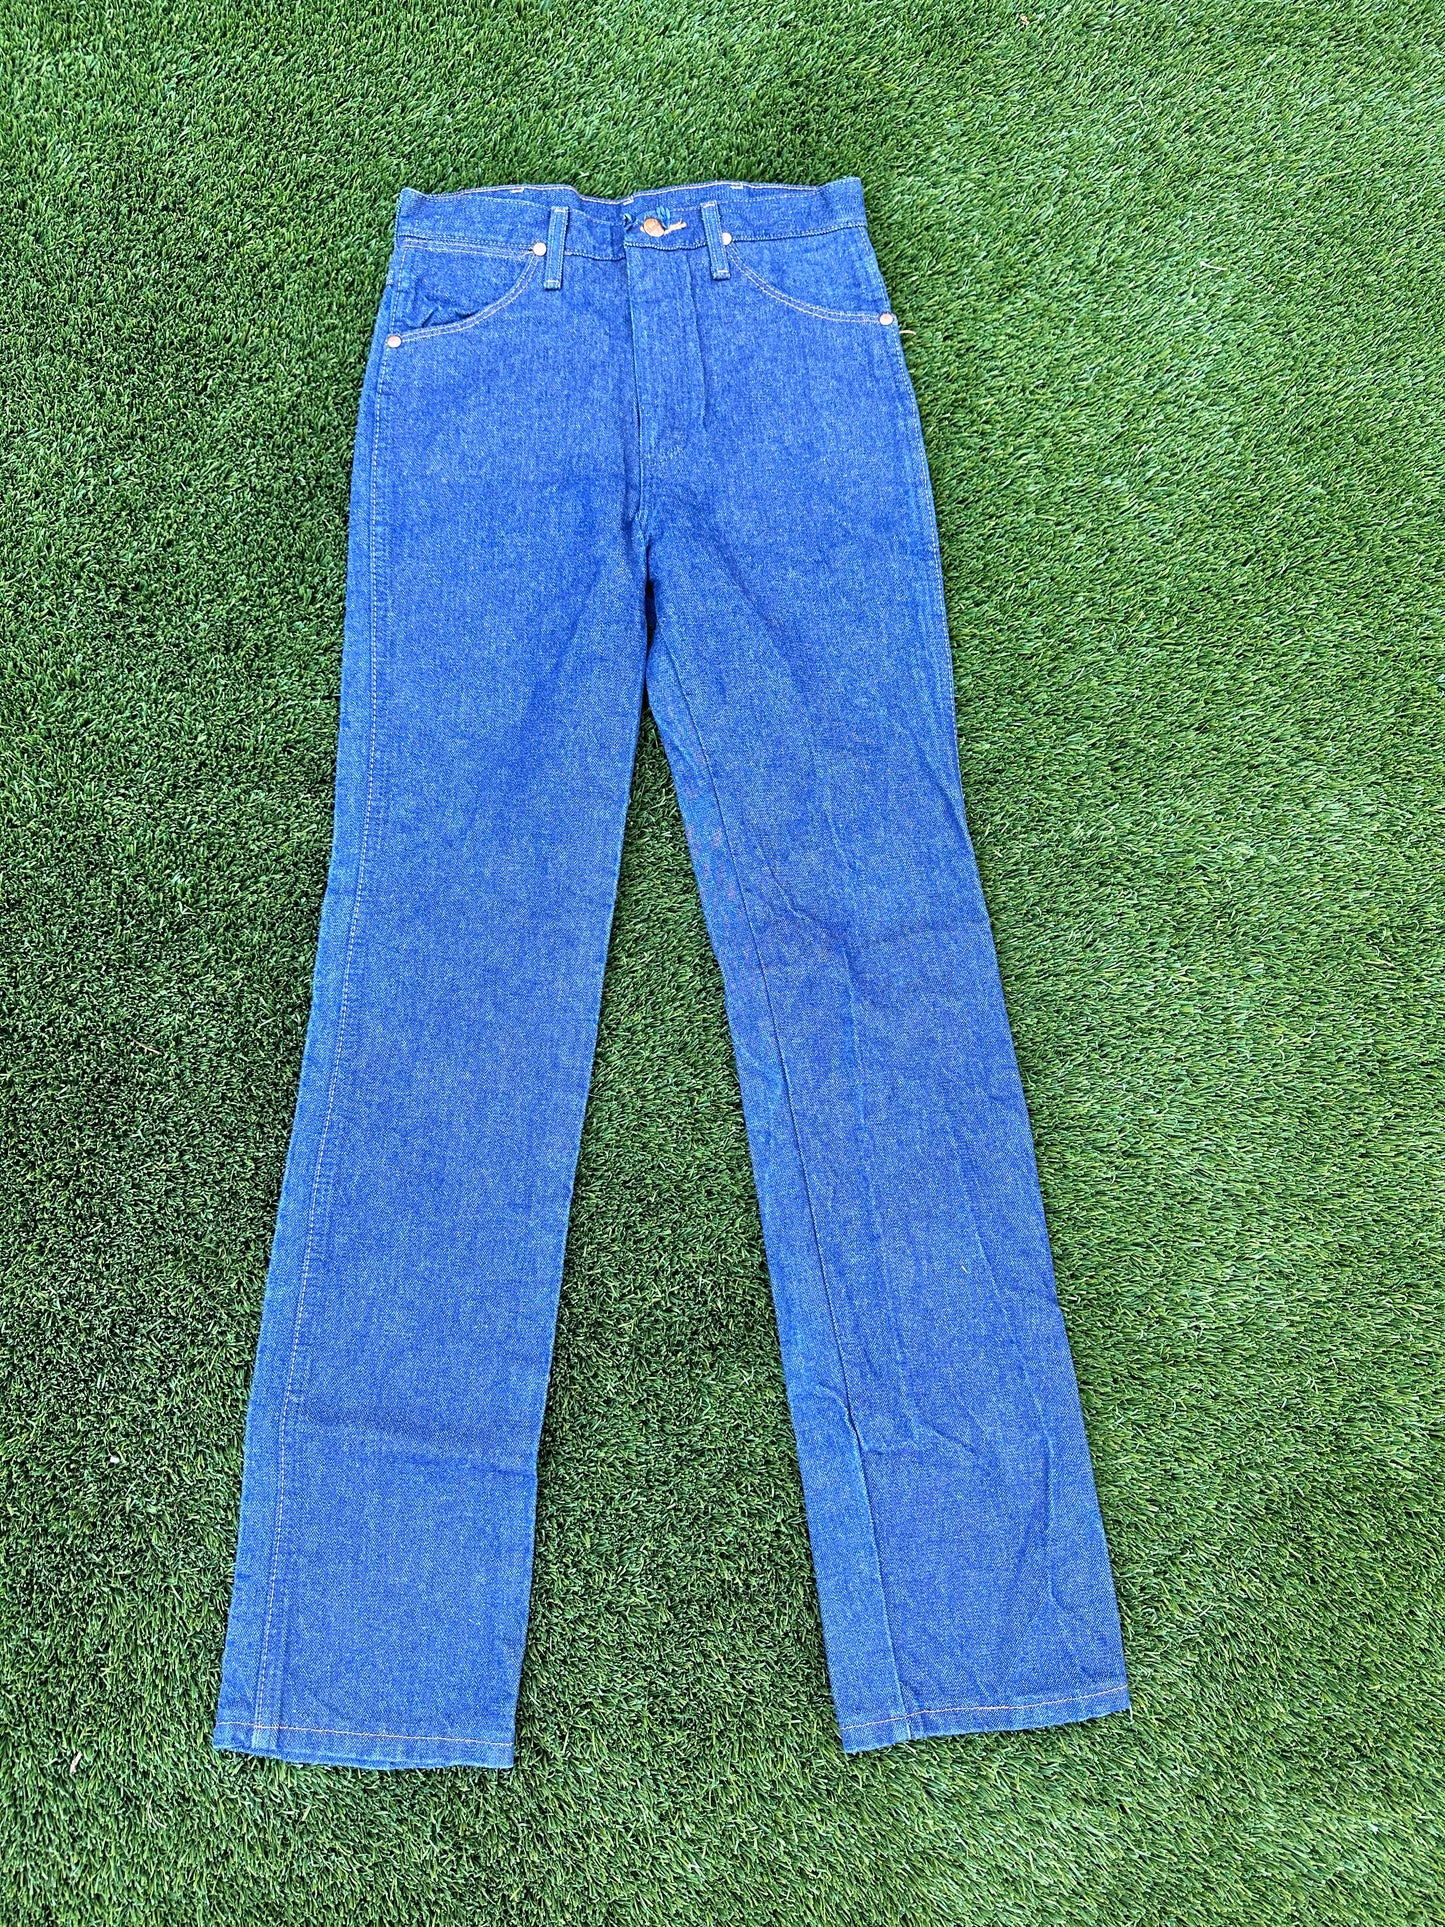 THE GET DOWN: BoBo’s Wrangler Vintage Blue Denim Jeans (29/34)